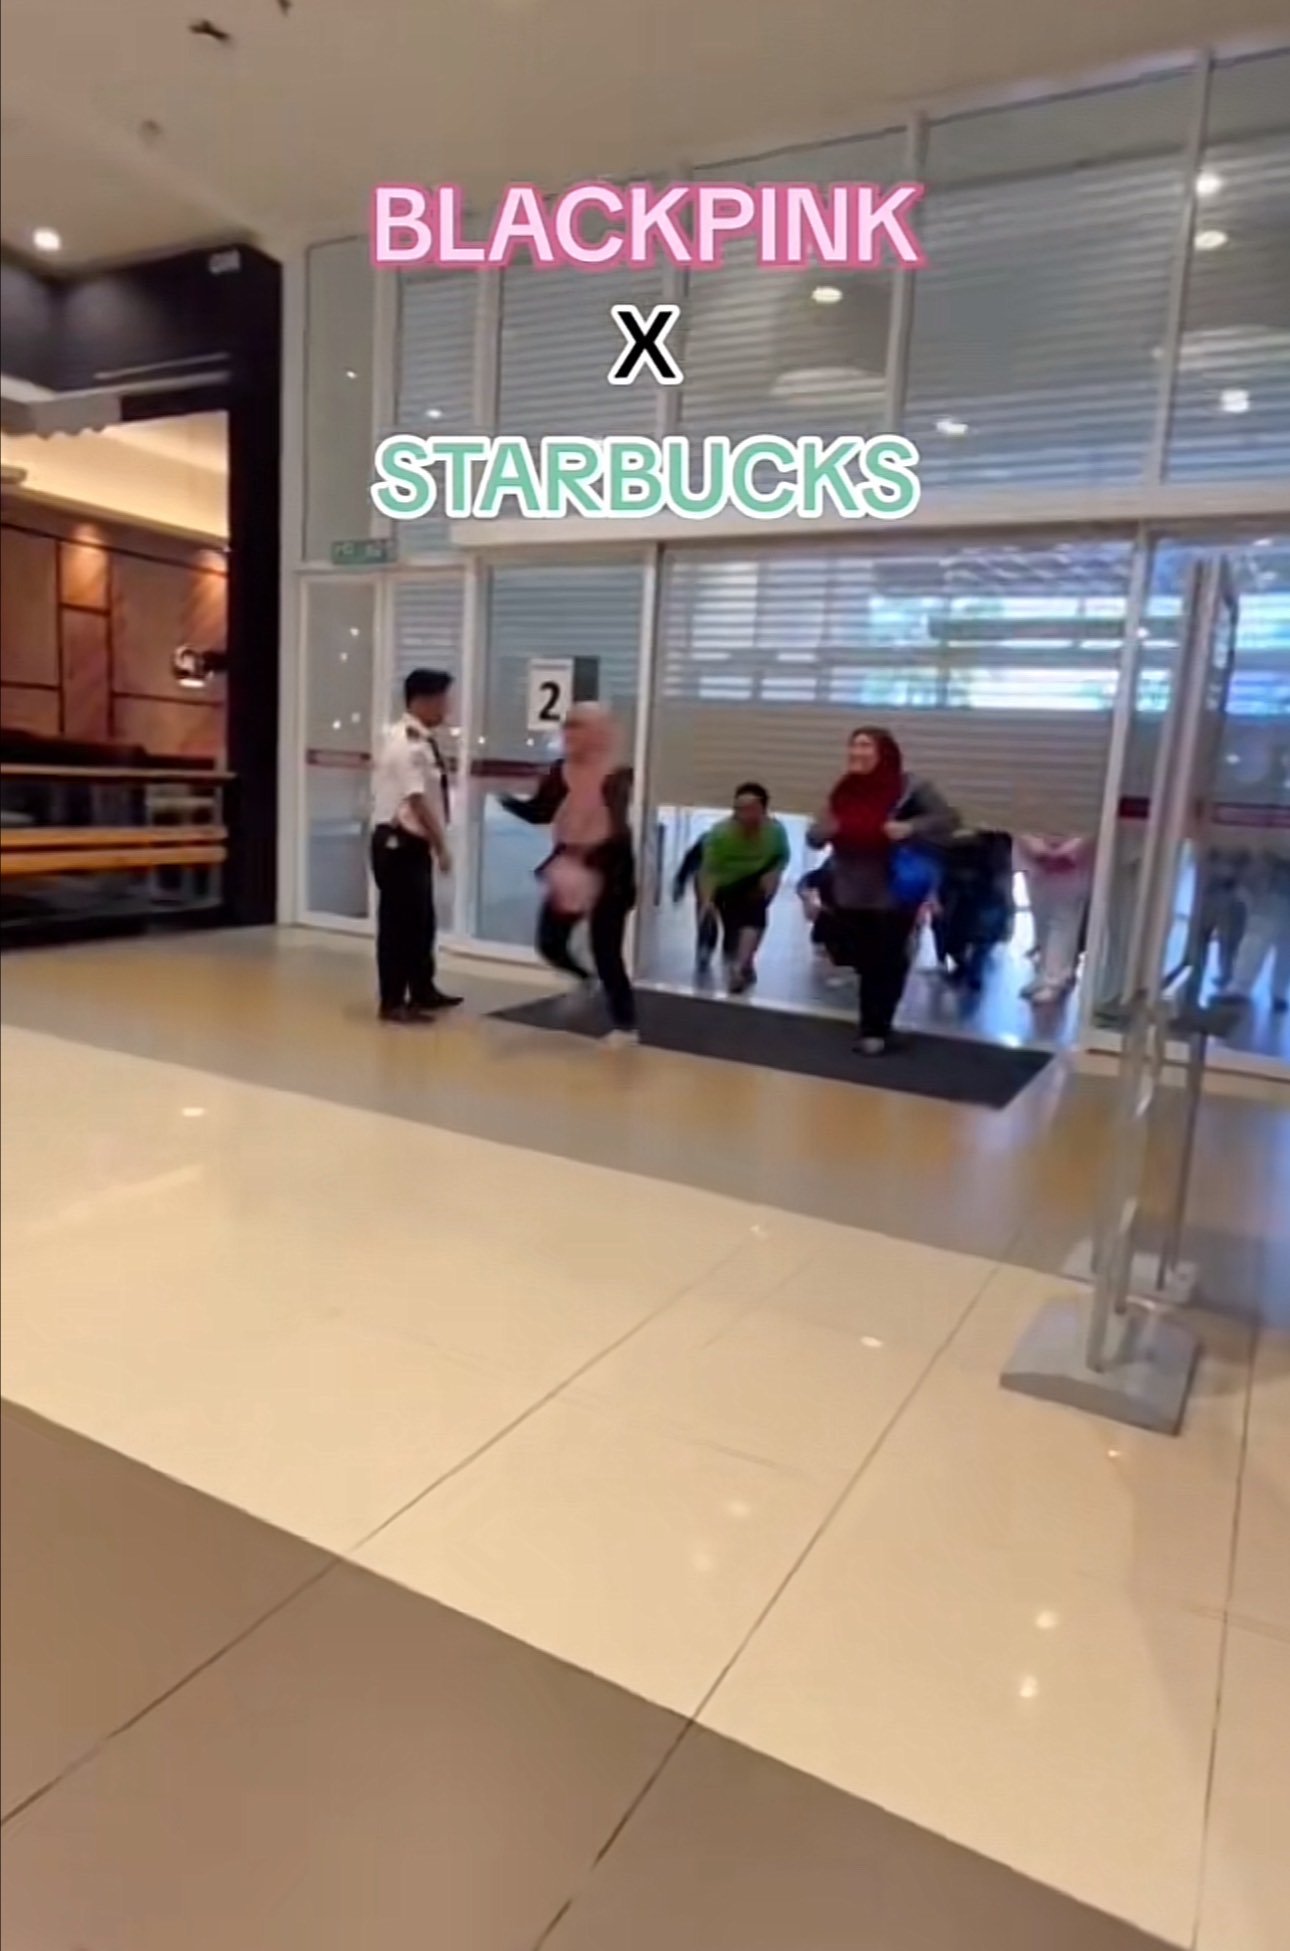 M'sian blinks rush for starbucks' exclusive blackpink merchandise before mall's opening hours